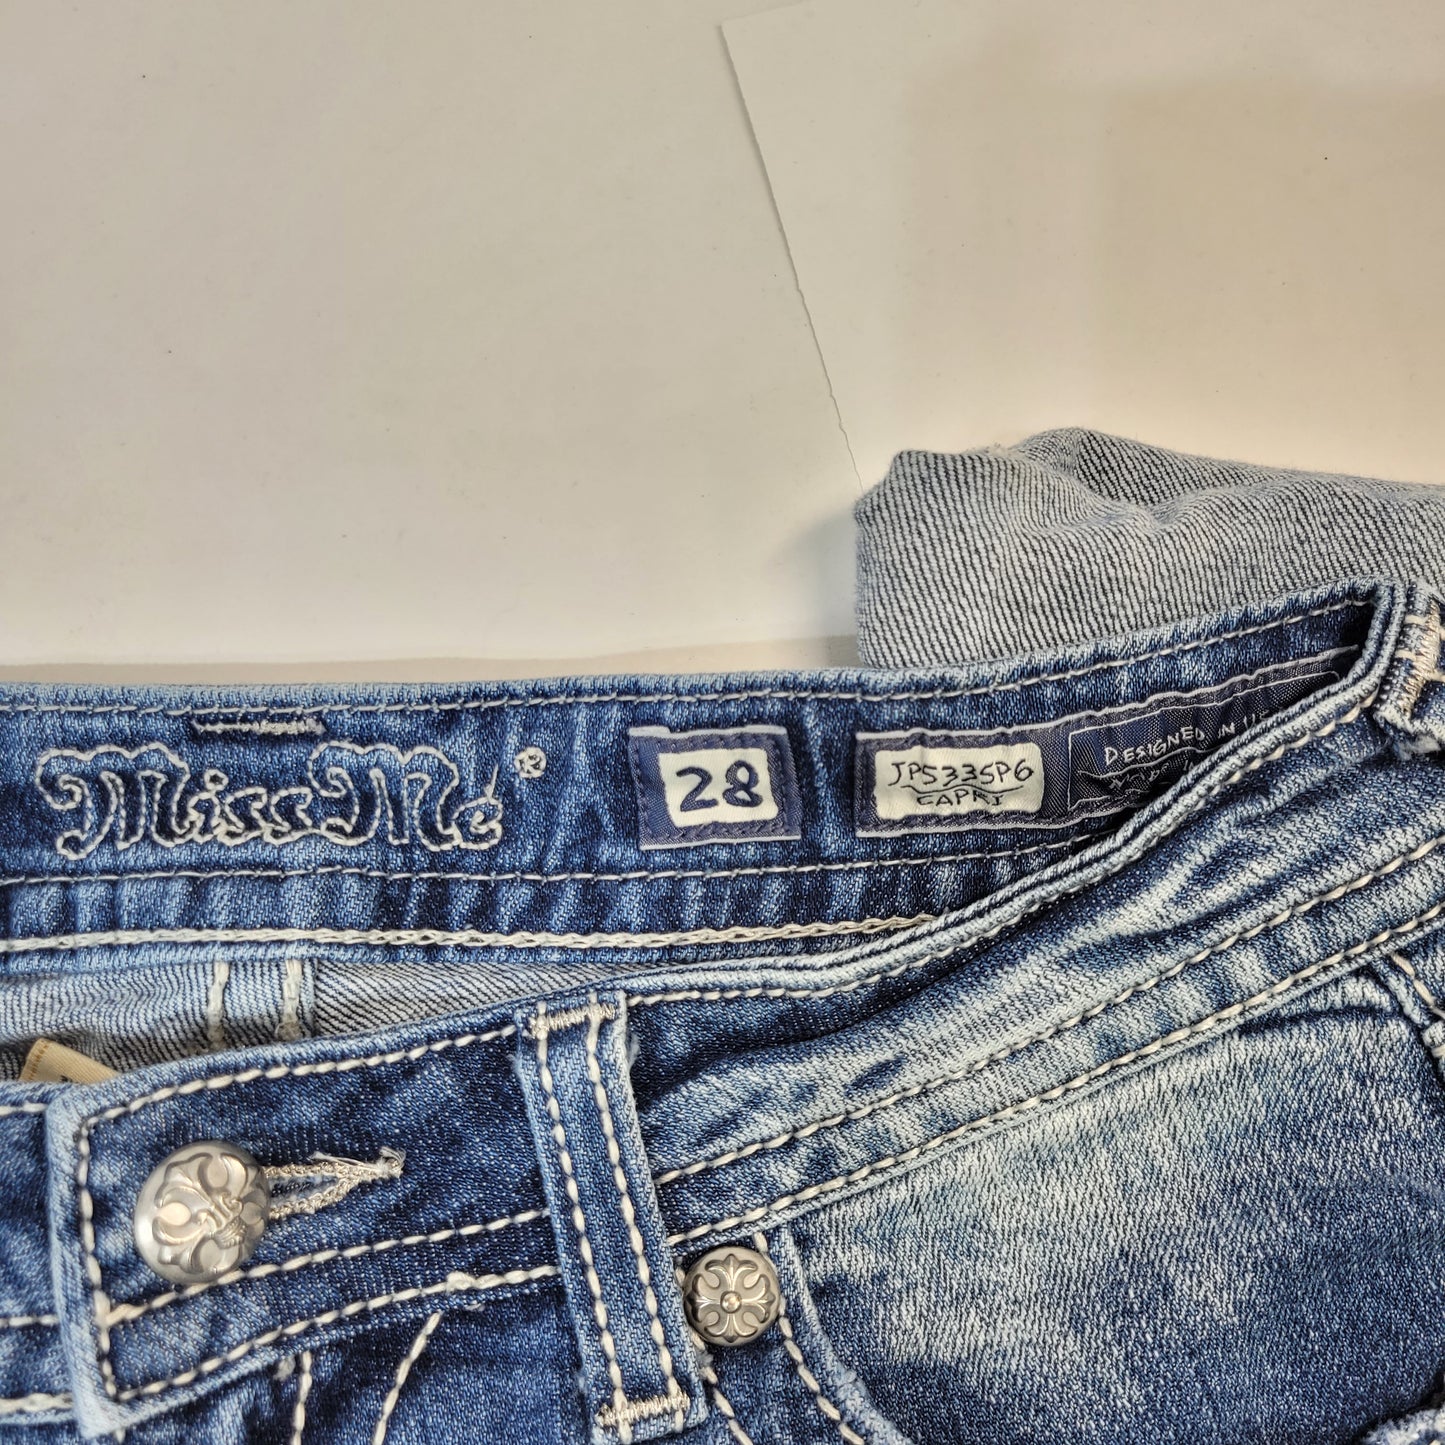 Miss Me Women's Denim Capris Jeans Light Washed - Medium